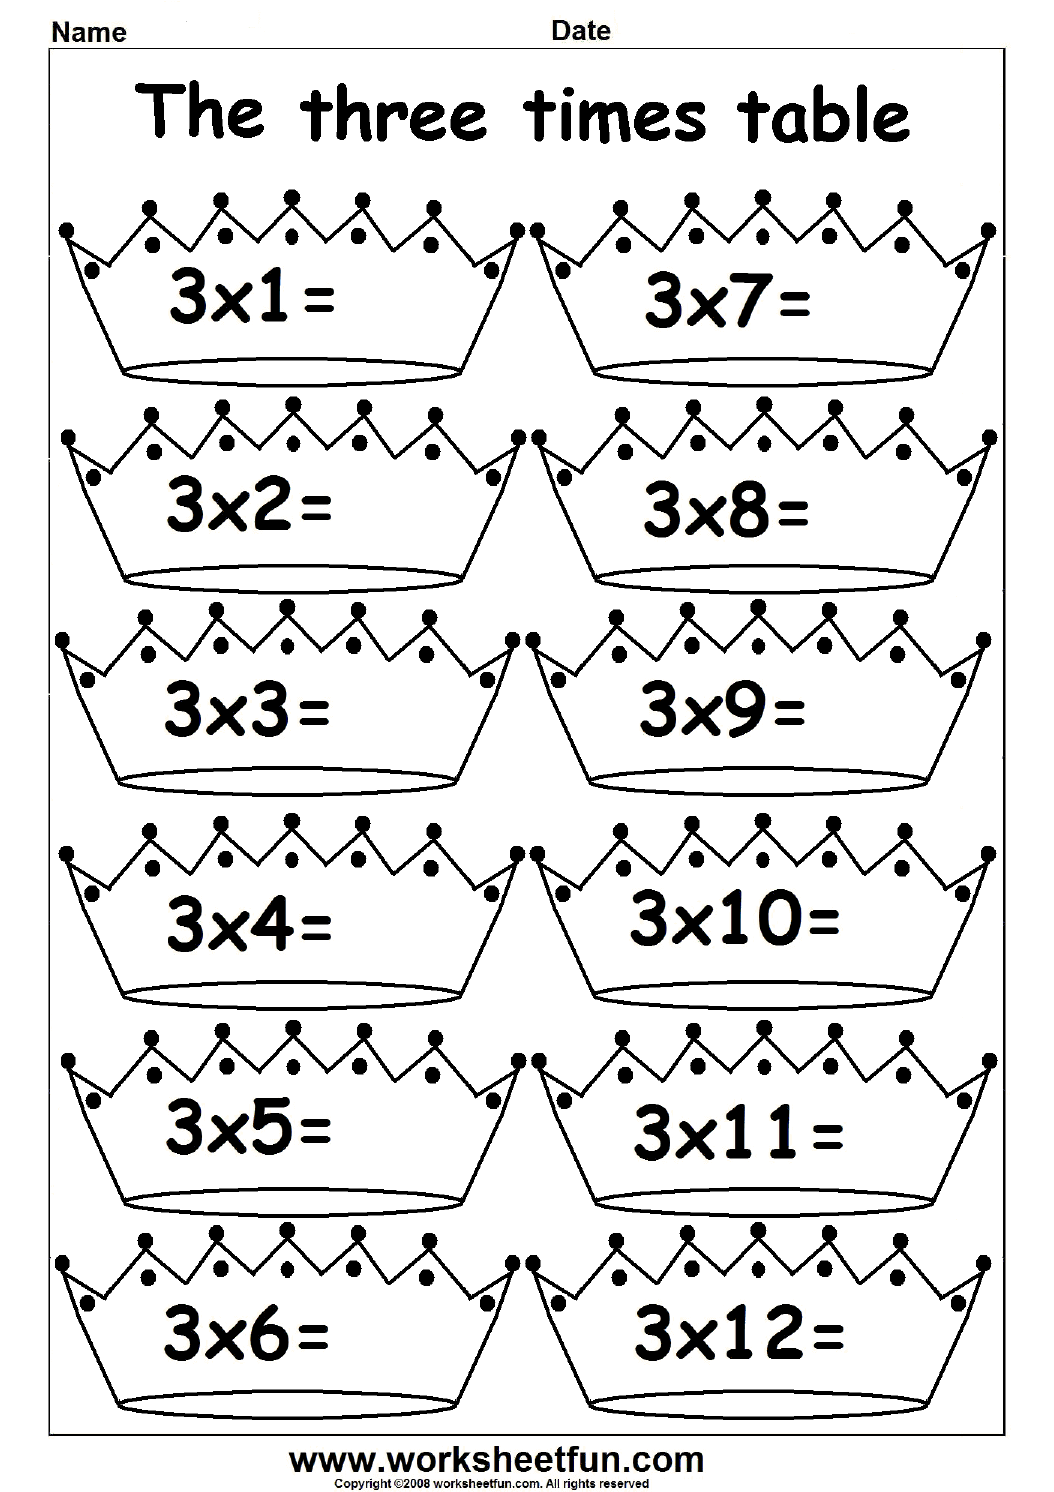  Multiplication Times Tables Worksheets 2 3 4 6 7 8 9 10 11 12 13 14 15 16 17 18 